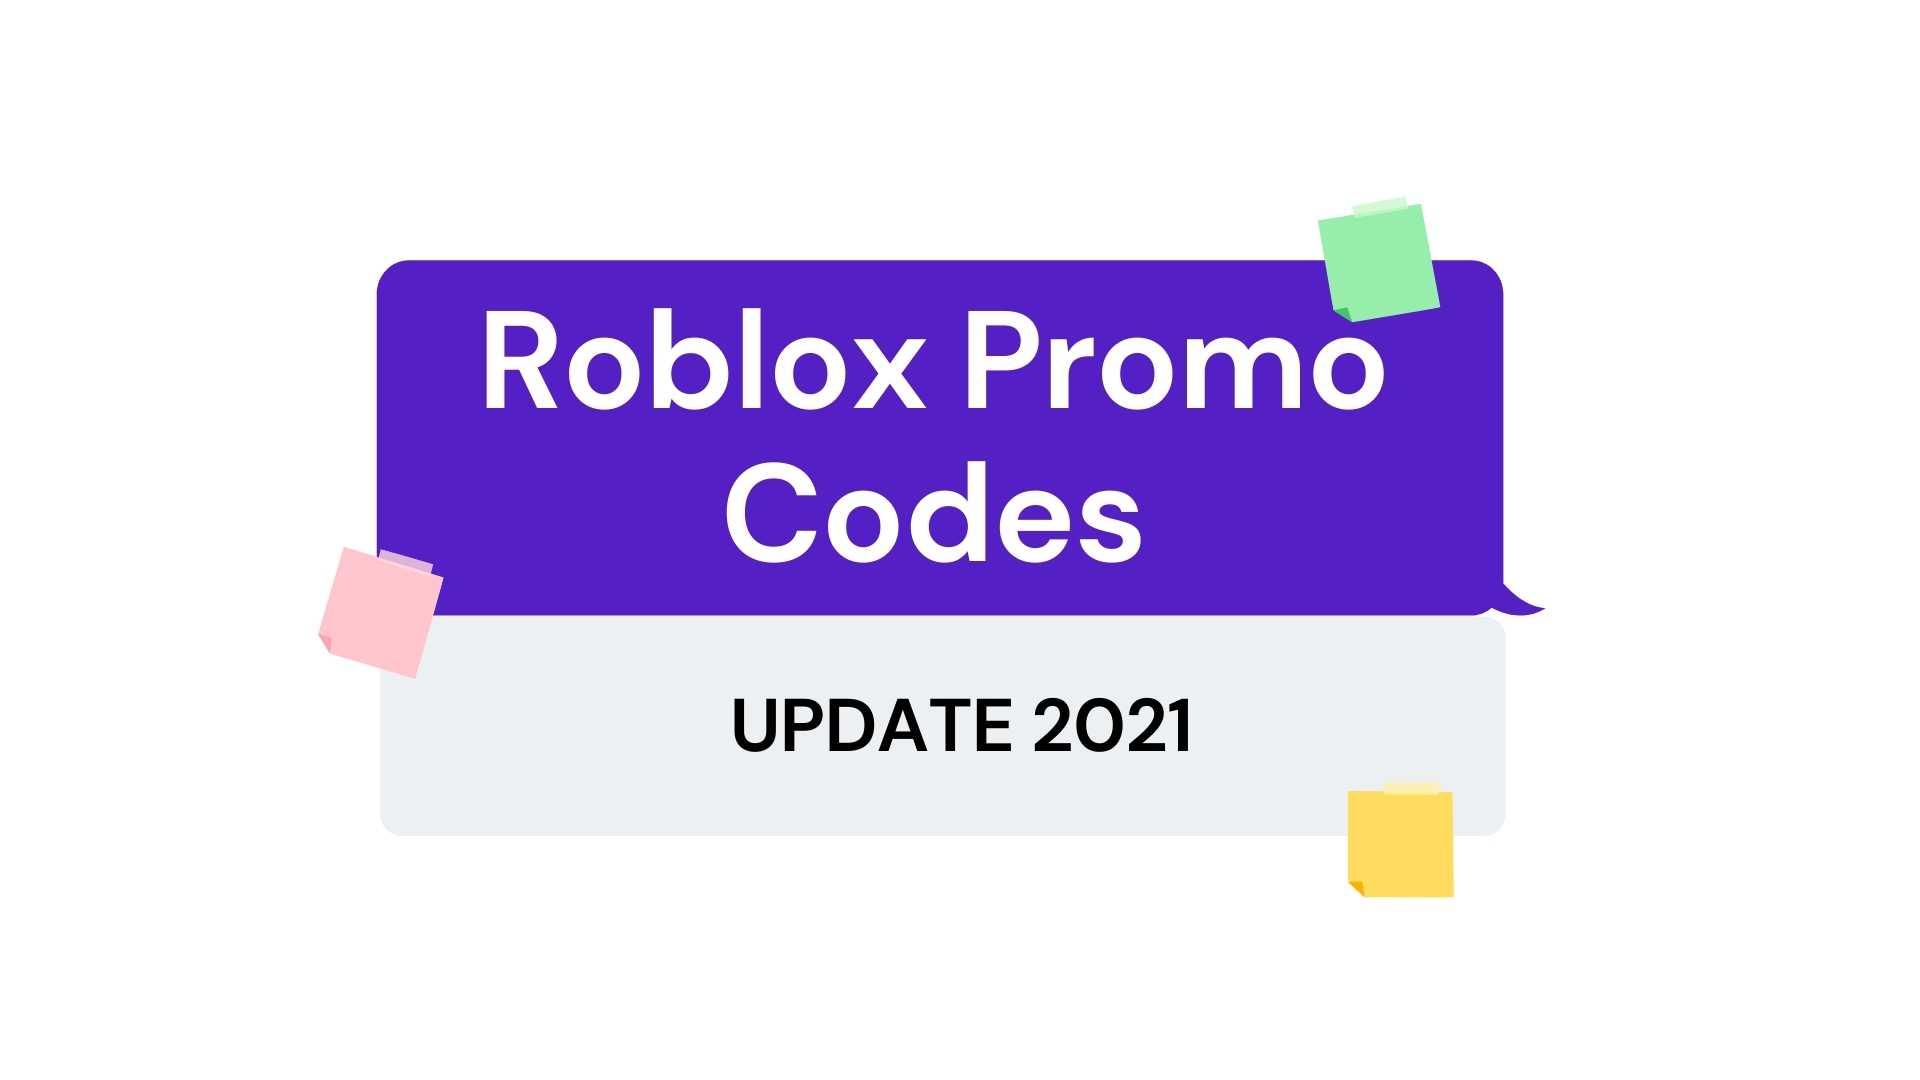 Roblox Promo Codes Discount Codes Full List June 2021 Salusdigital - roblox home promo codes